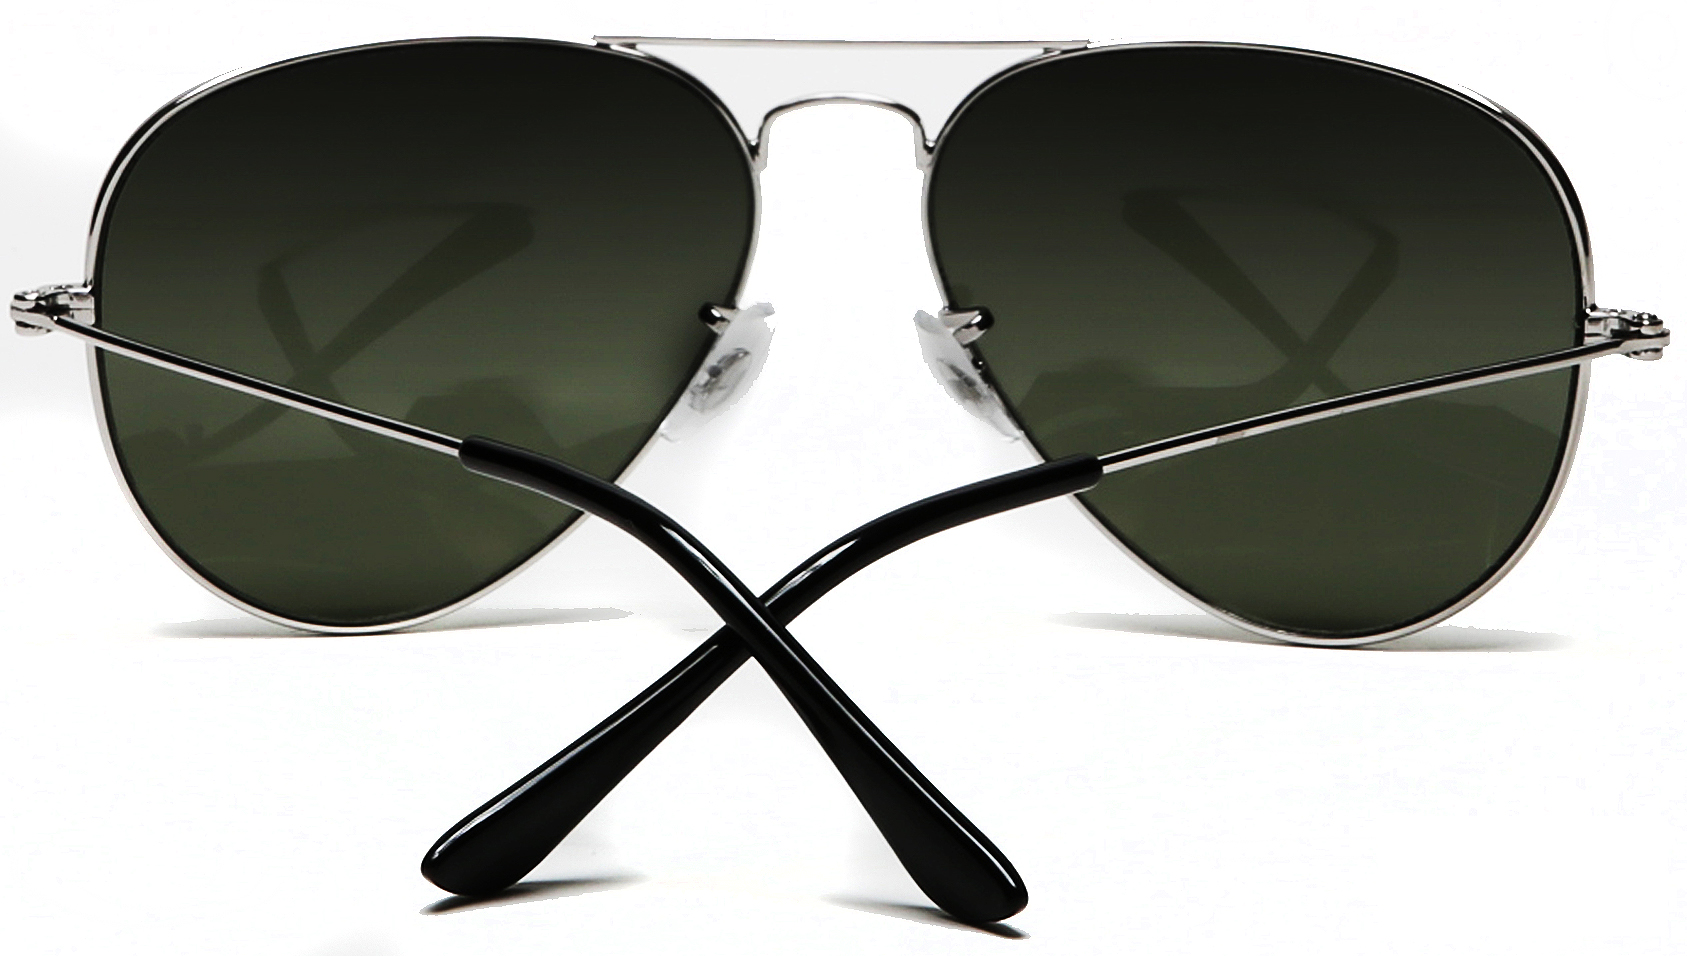 Samba Shades Unisex Classic Aviator Sunglasses Silver Frame Green Lens - Glen & Ivy Sky Inspired - image 4 of 4